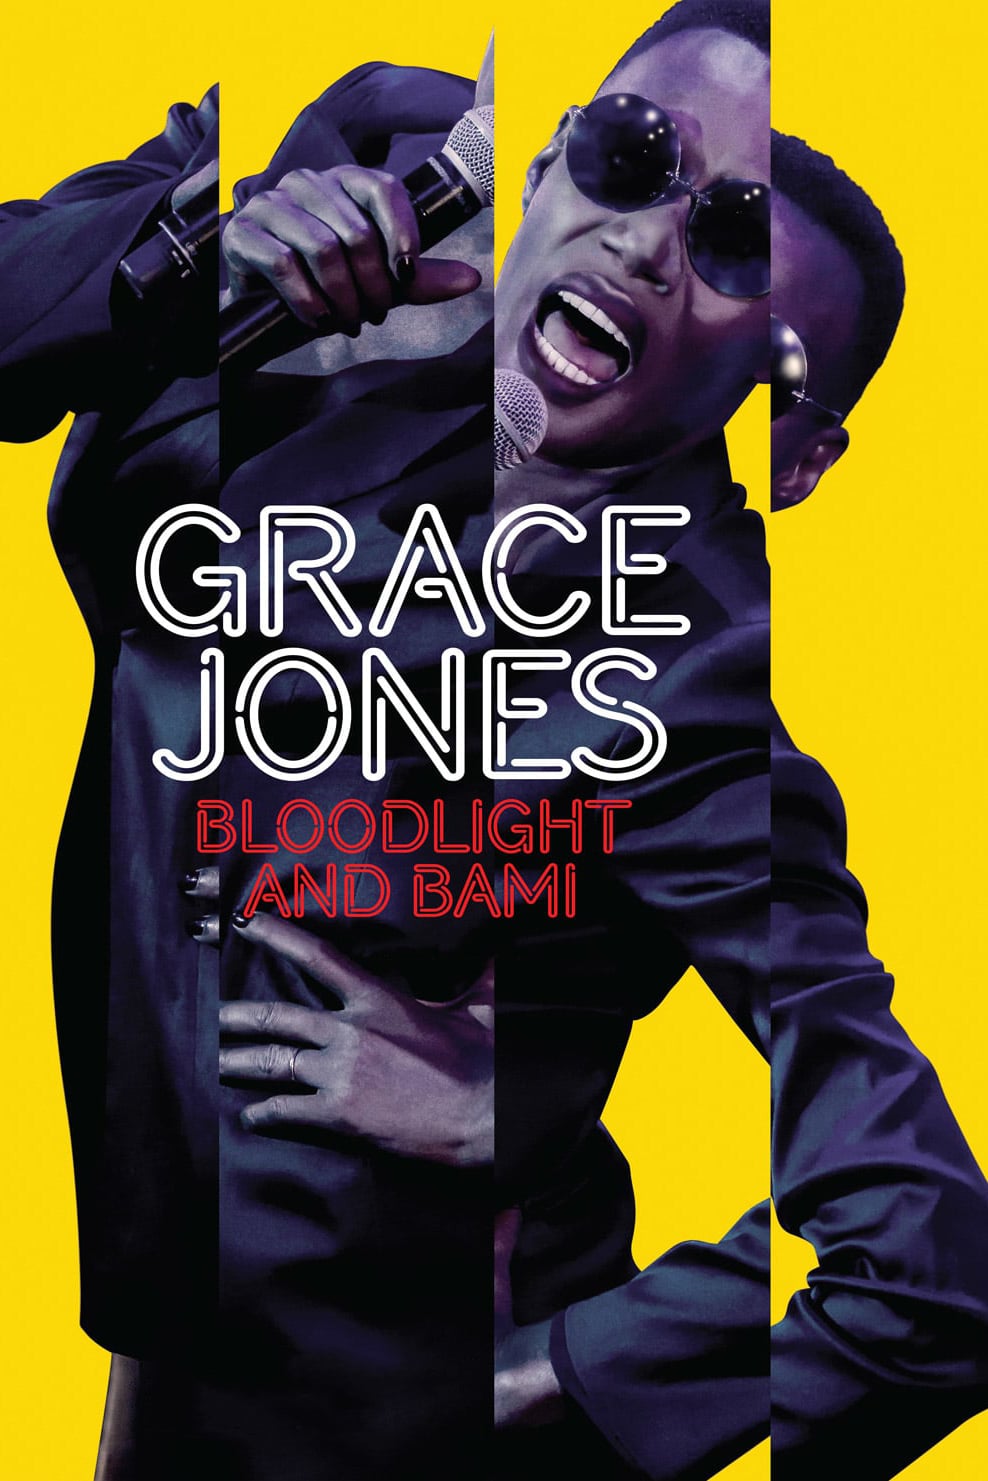 Caratula de Grace Jones: Bloodlight and Bami (Grace Jones: Bloodlight and Bami) 